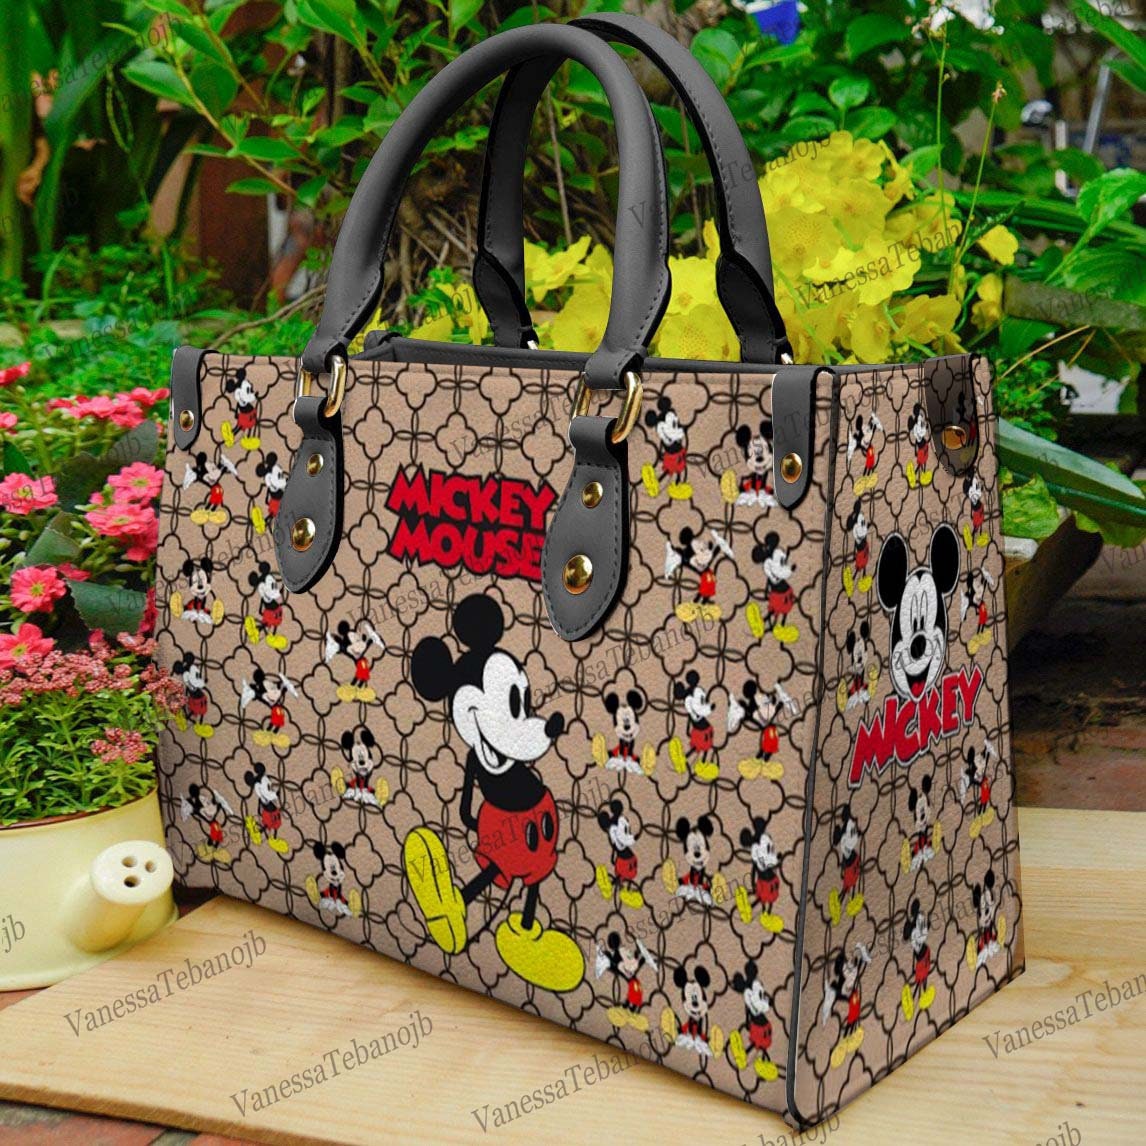 Vintage Mickey Leather Bag